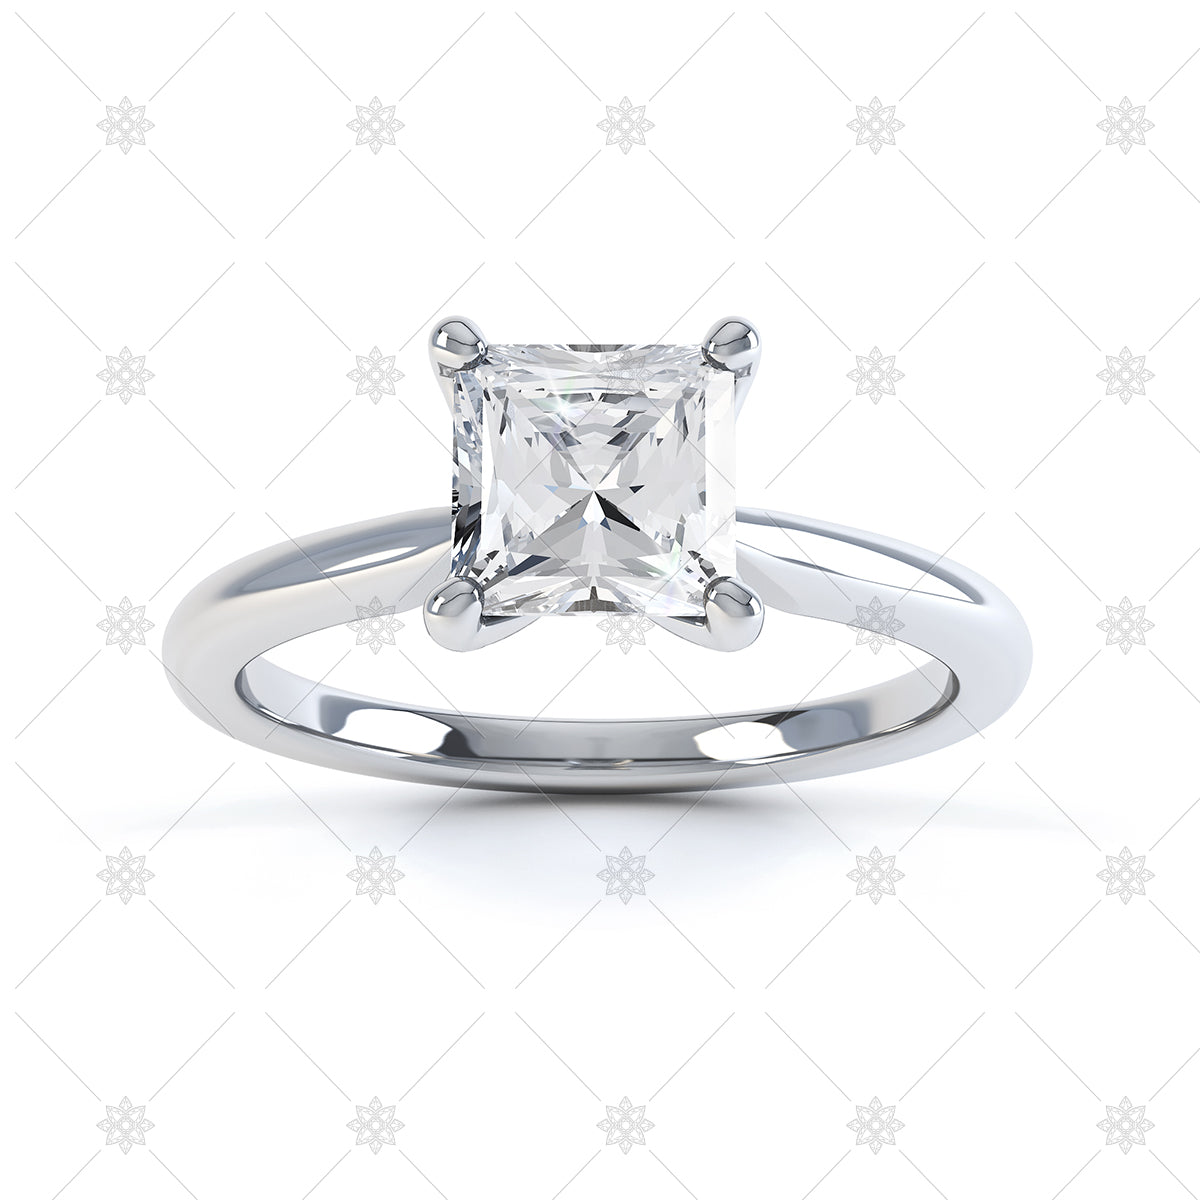 Square Diamond Ring Image Pack - 3002 – JEWELLERY GRAPHICS